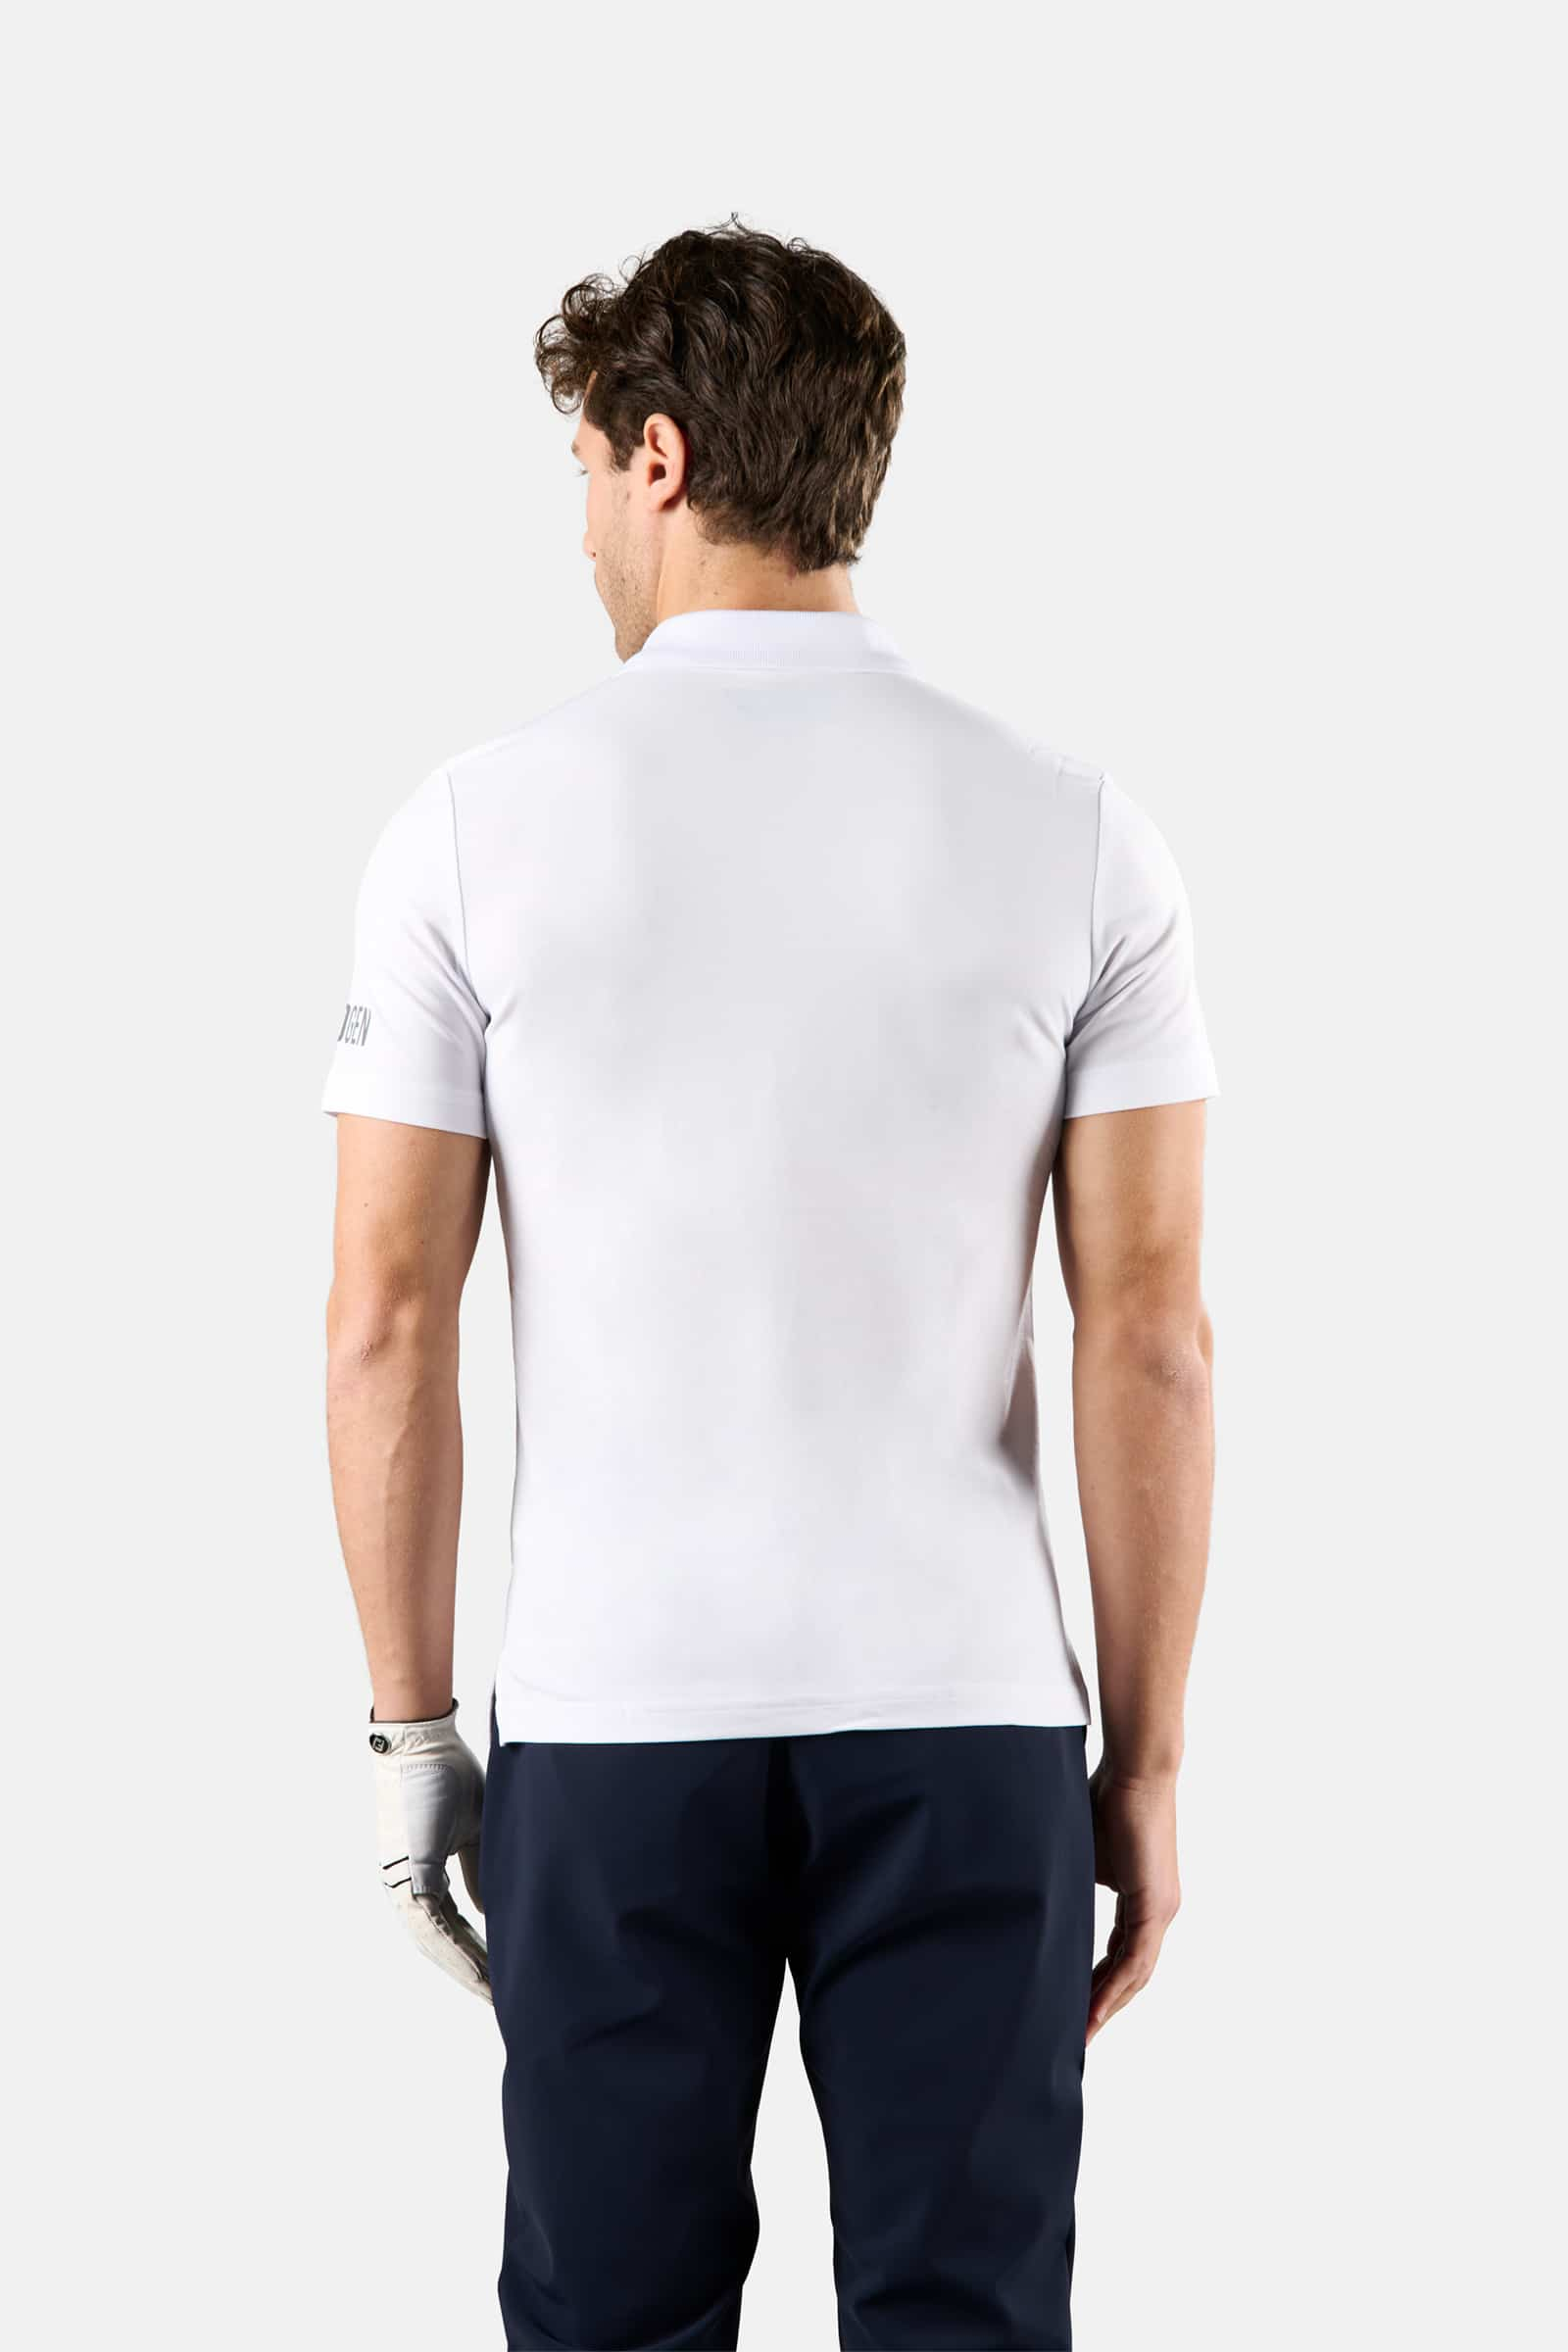 GOLF PIQUET POLO - WHITE - Hydrogen - Luxury Sportwear